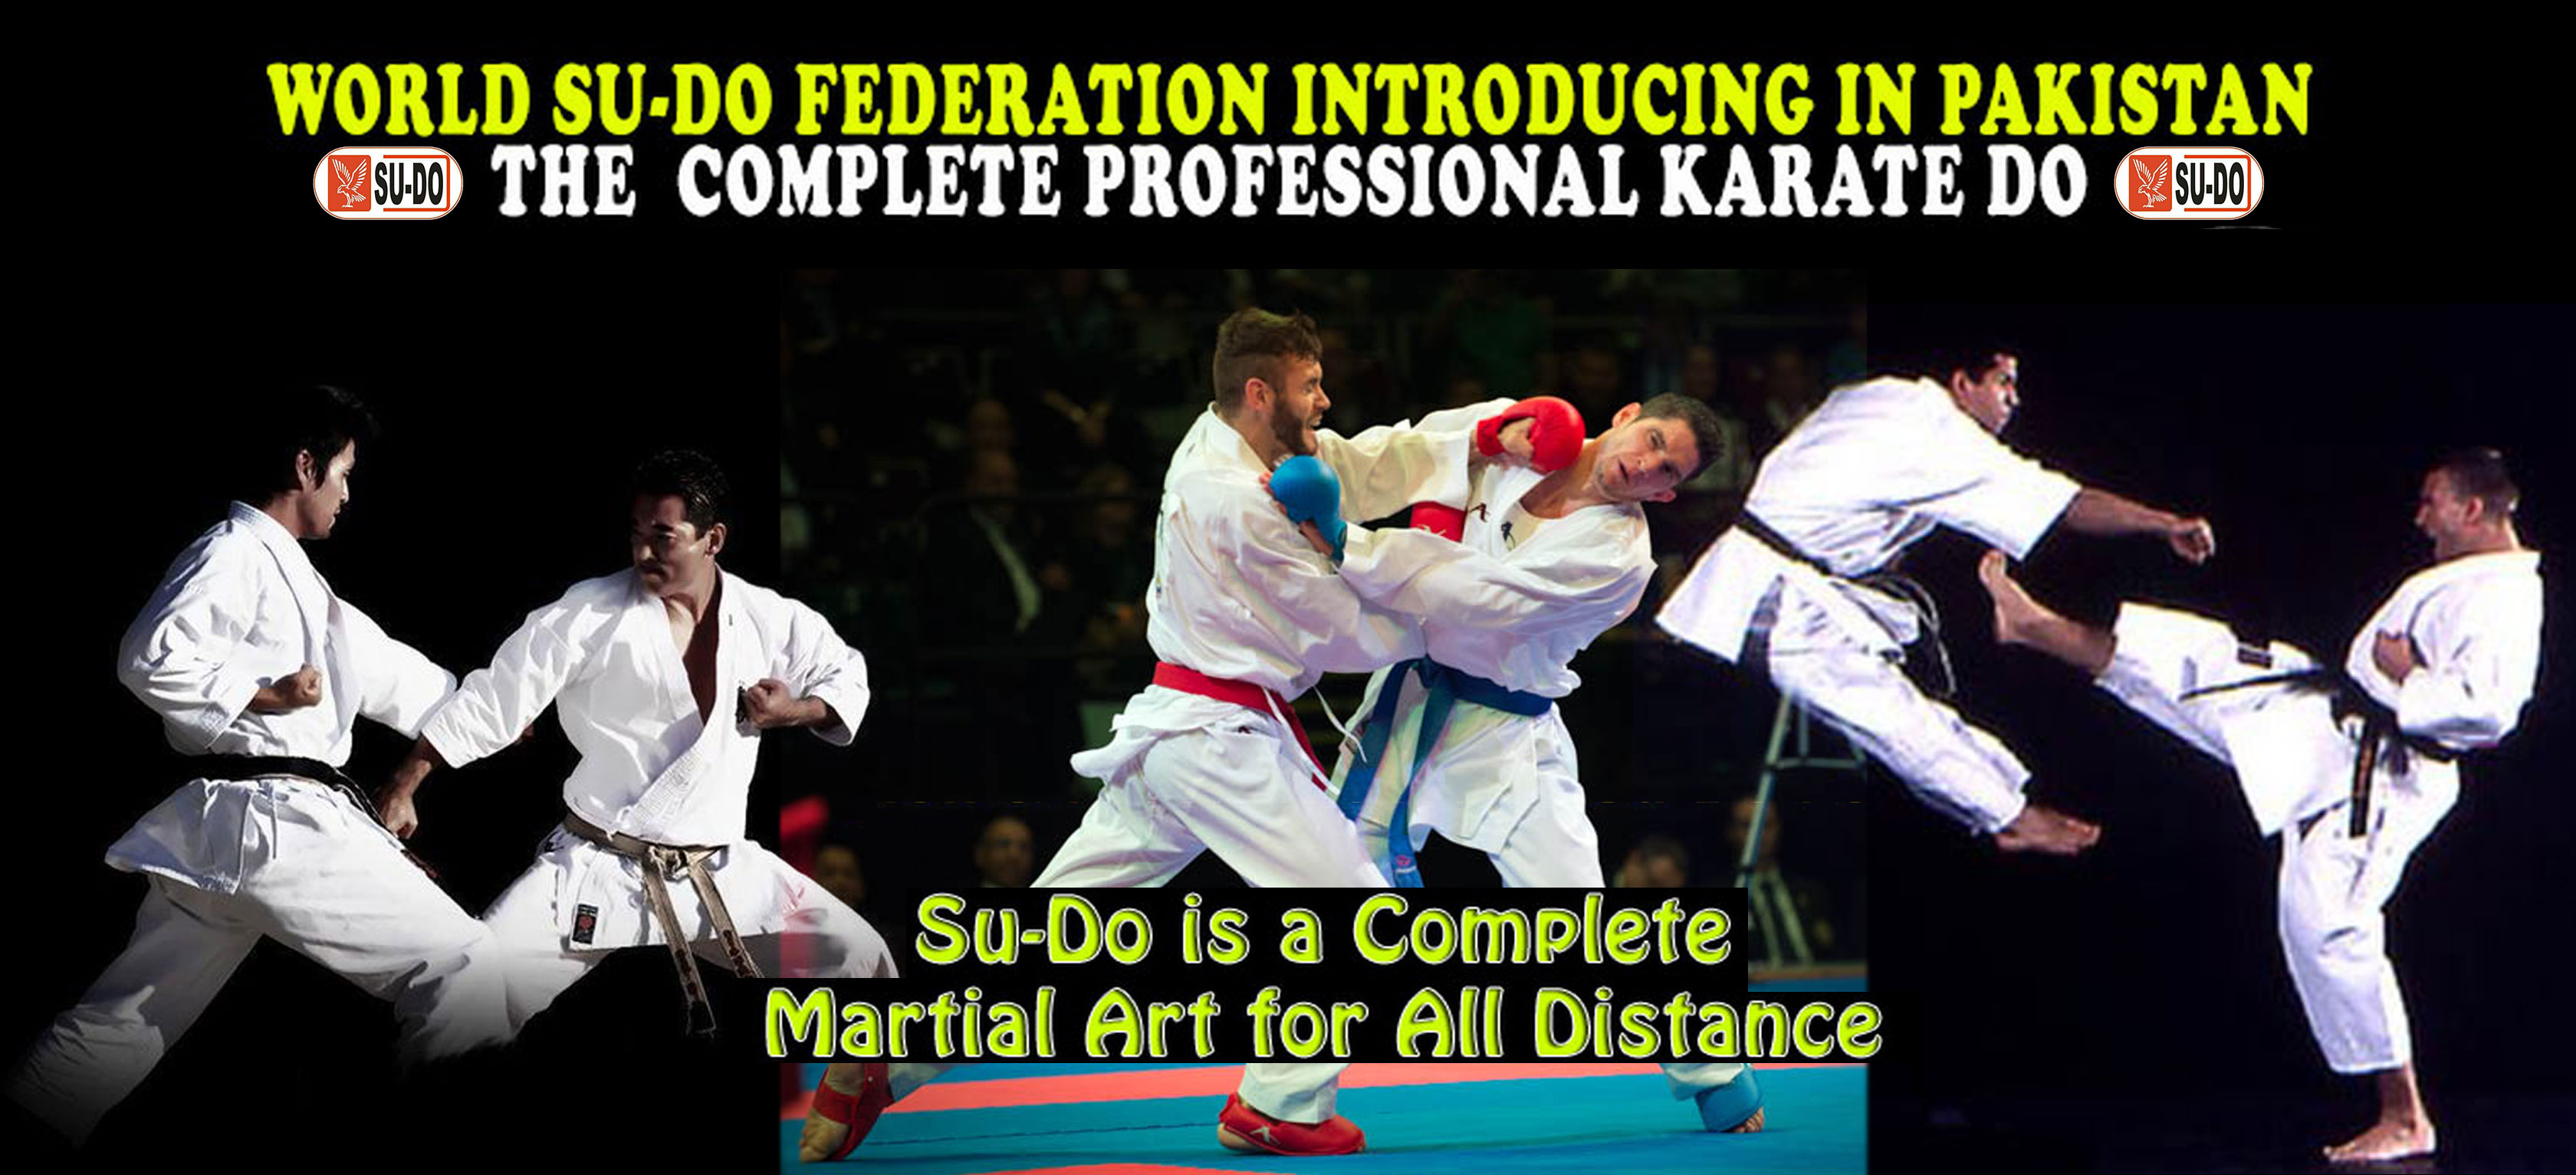 Pakistan SuDo Federation SU-DO Karate full contact Martial-Art Prince SUDO Academy karachi pakistan street fight self defense training tang-soo-do